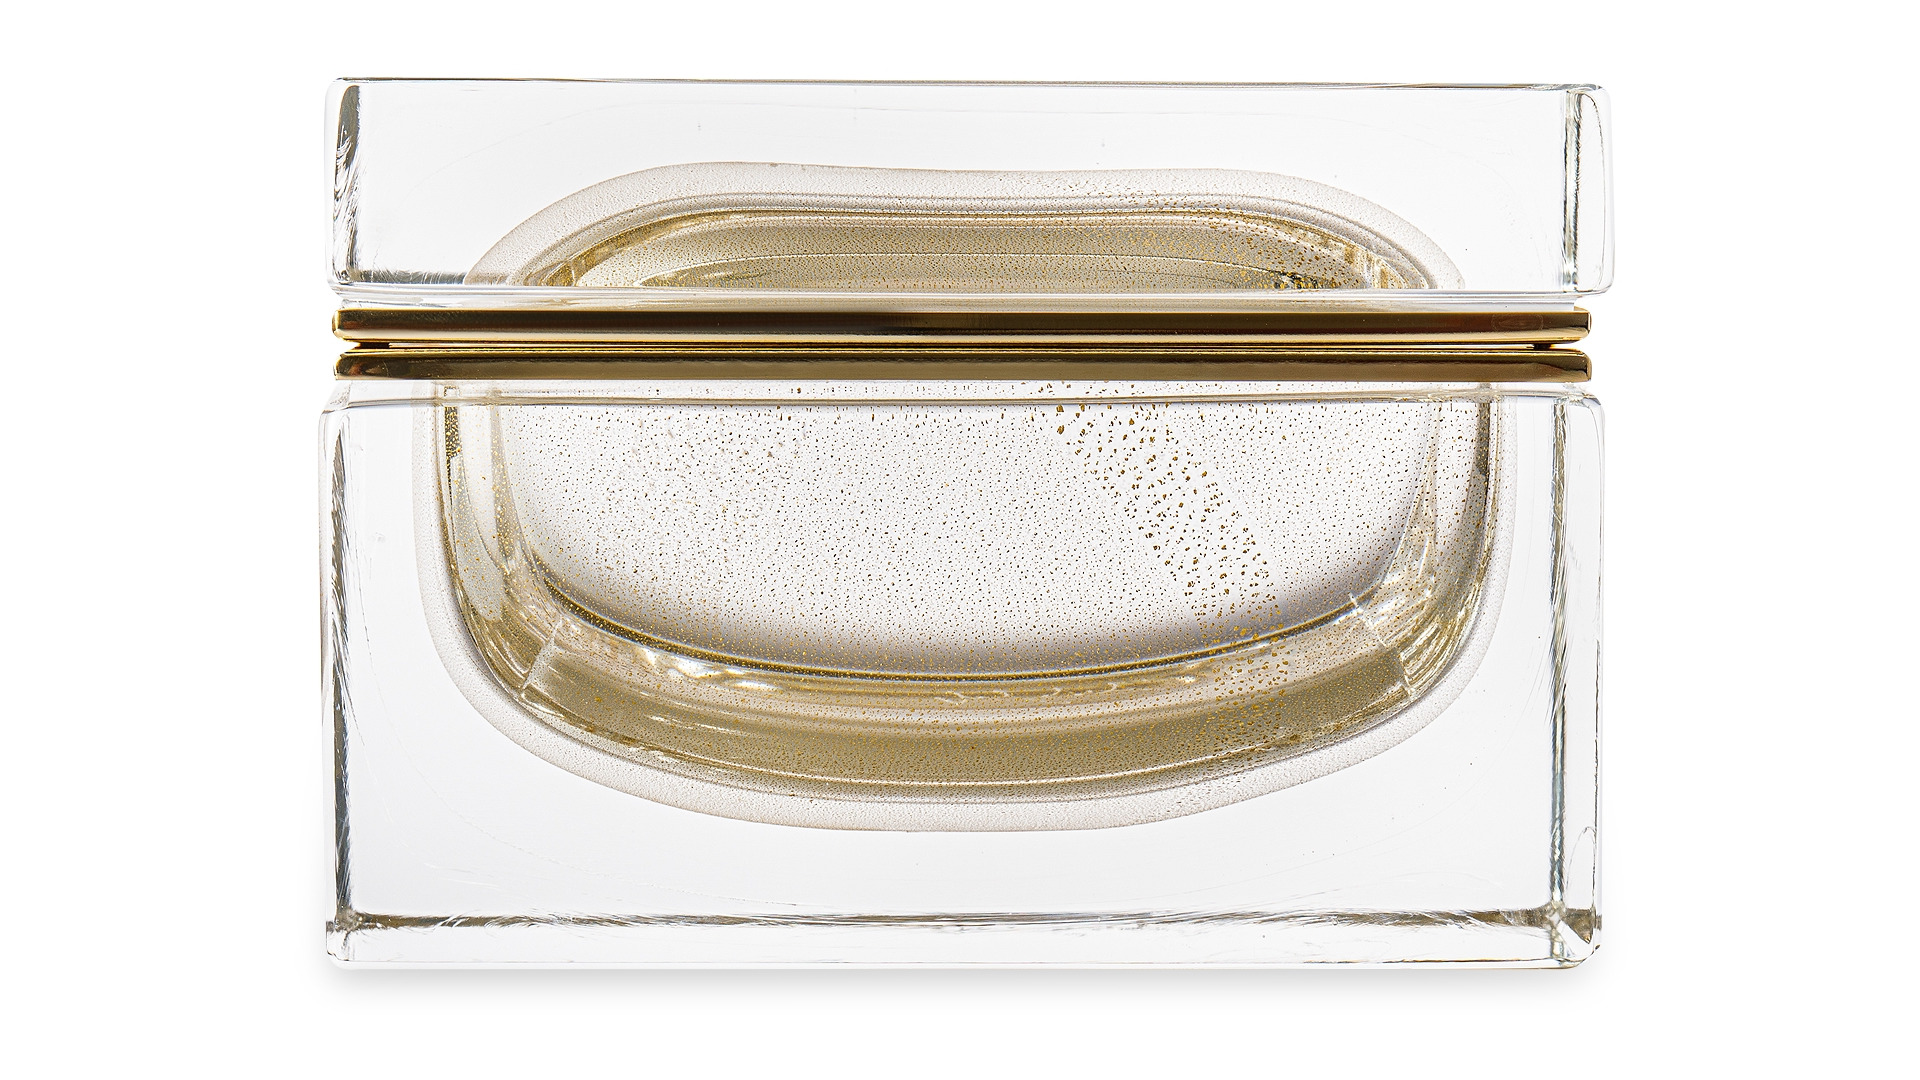 Шкатулка для украшений Alessandro Mandruzzato 18х12х11 см, стекло муранское, золото